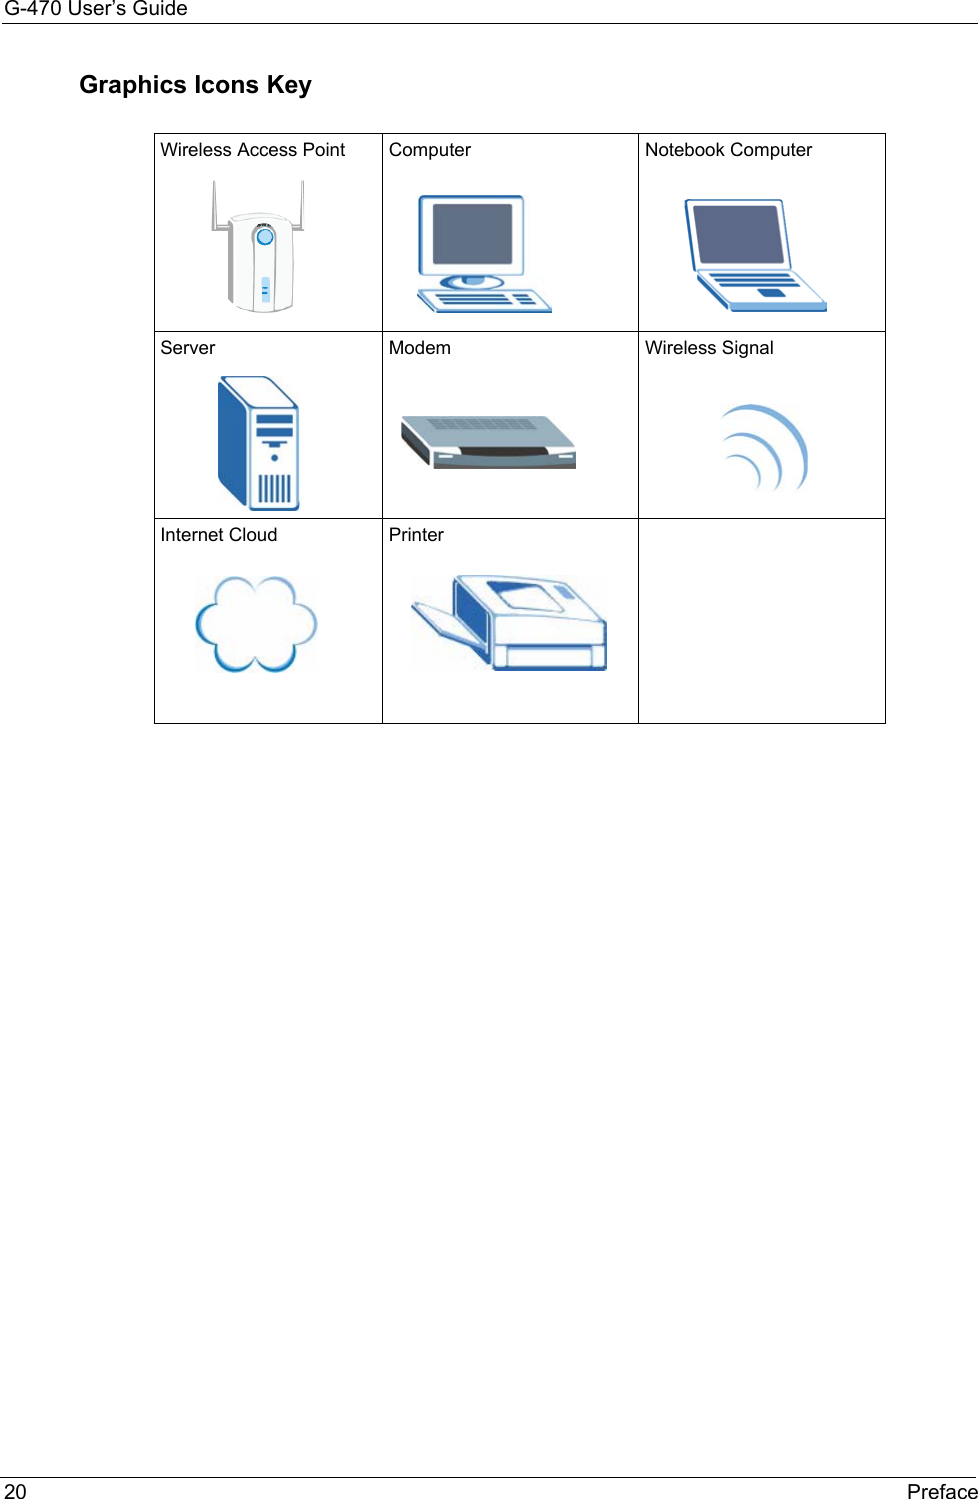 G-470 User’s Guide20 PrefaceGraphics Icons KeyWireless Access Point  Computer  Notebook Computer Server  Modem  Wireless Signal Internet Cloud Printer